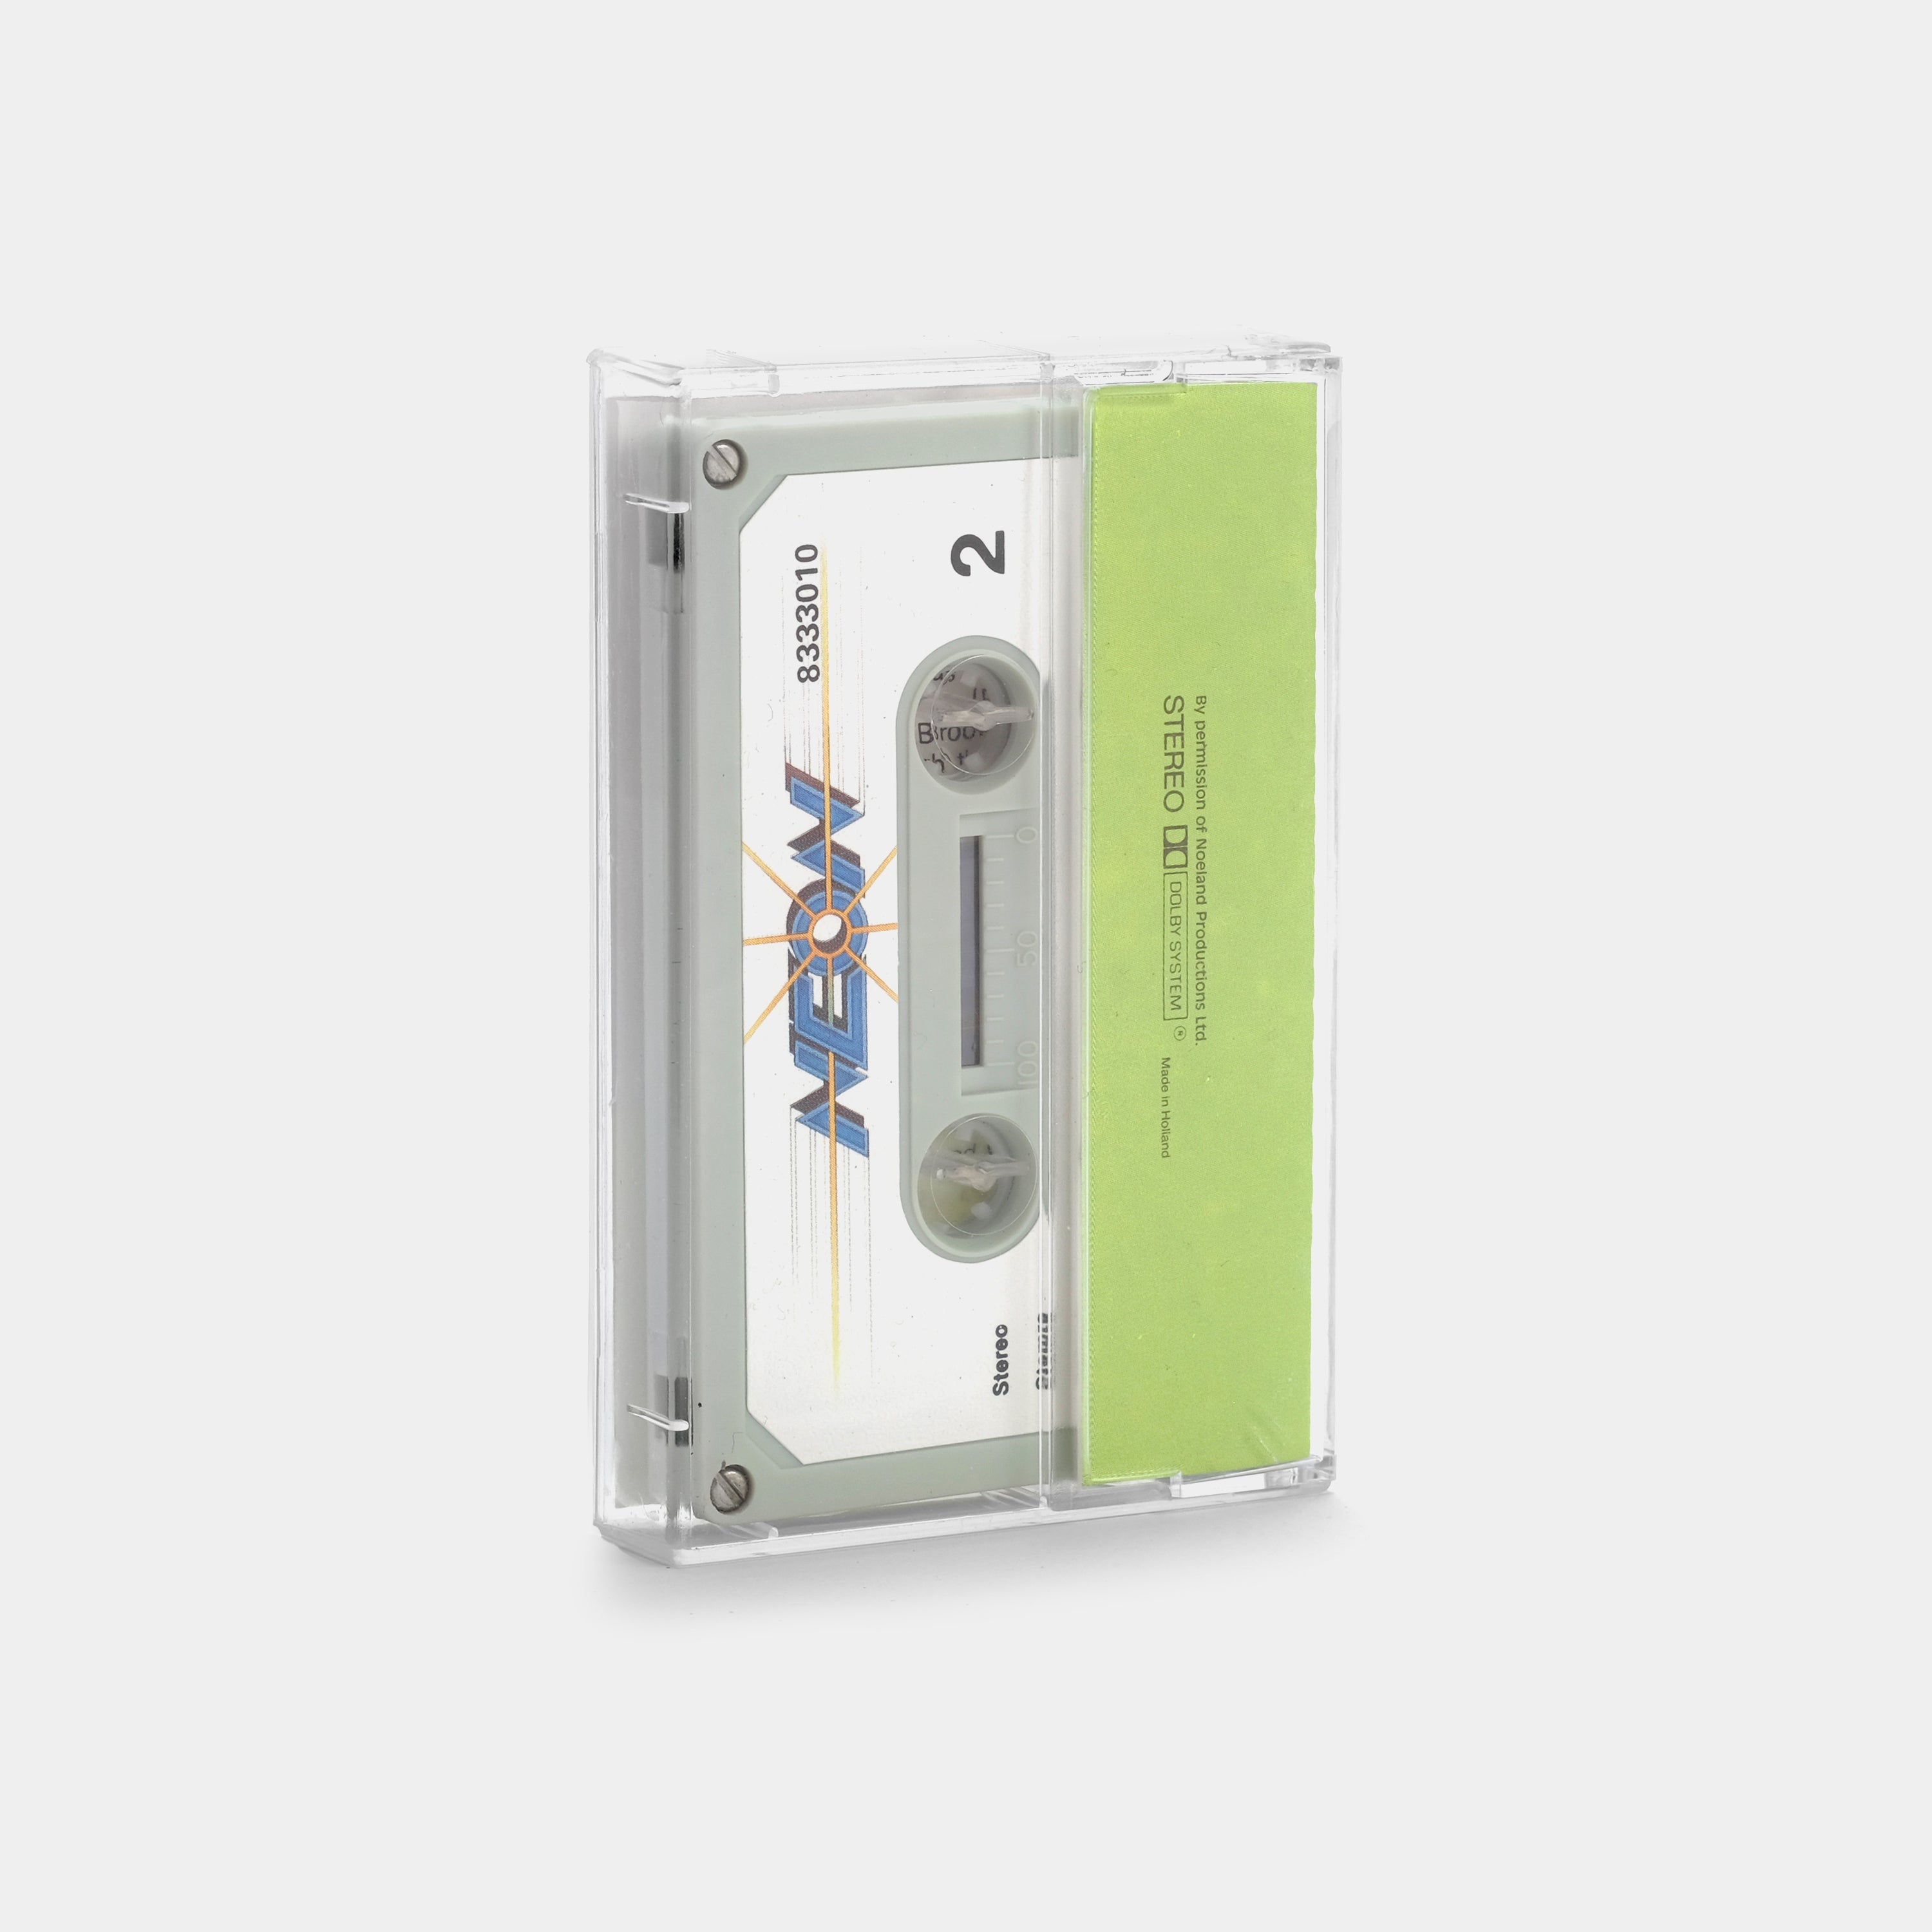 Procol Harum - Greatest Hits Cassette Tape